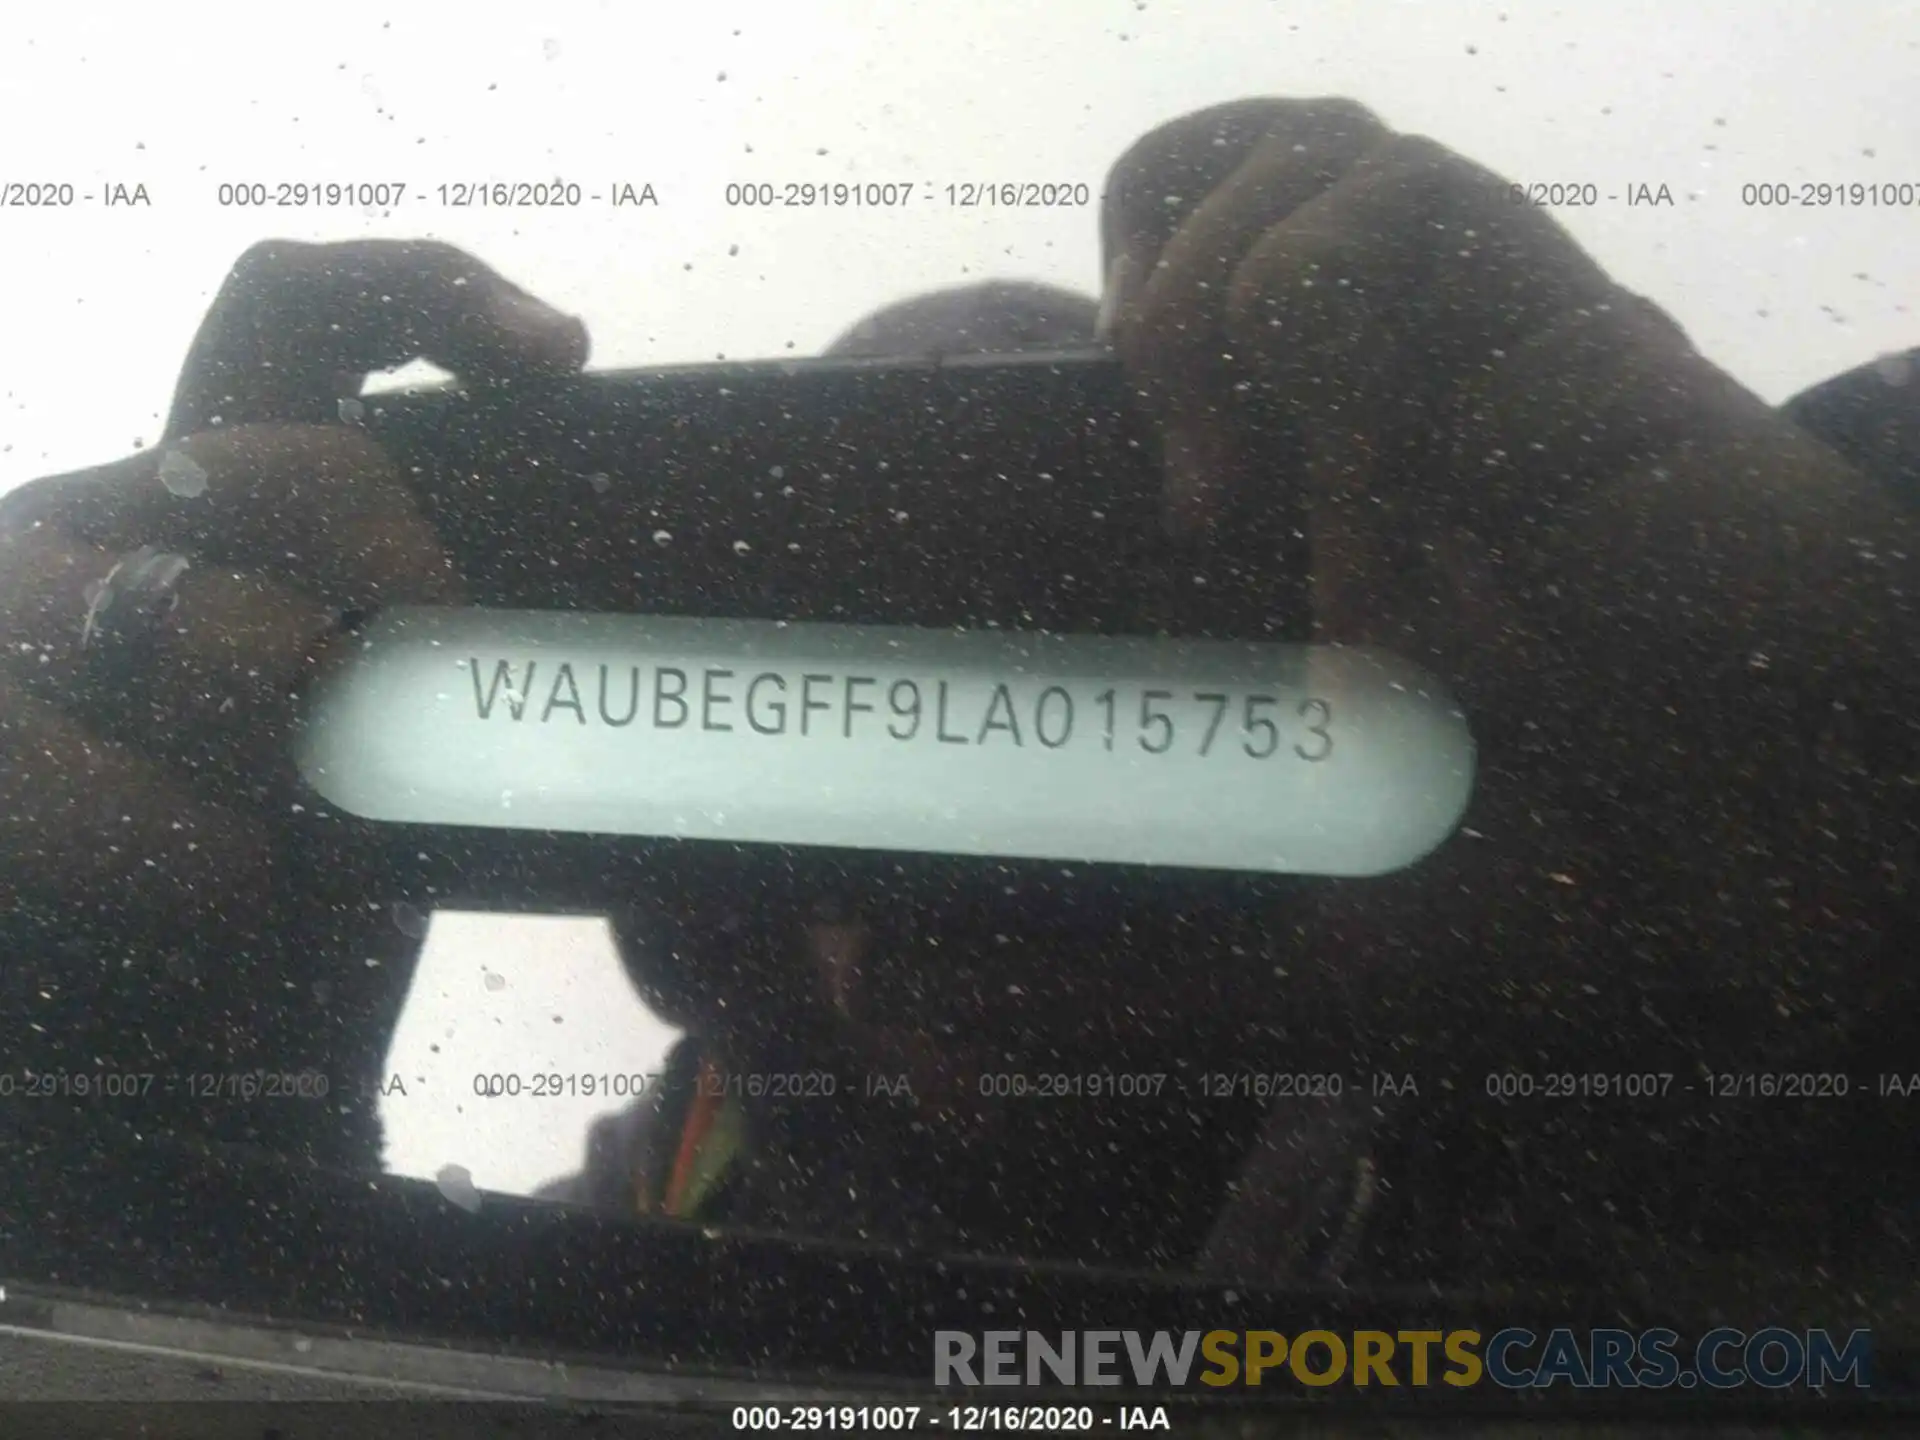 9 Photograph of a damaged car WAUBEGFF9LA015753 AUDI A3 SEDAN 2020